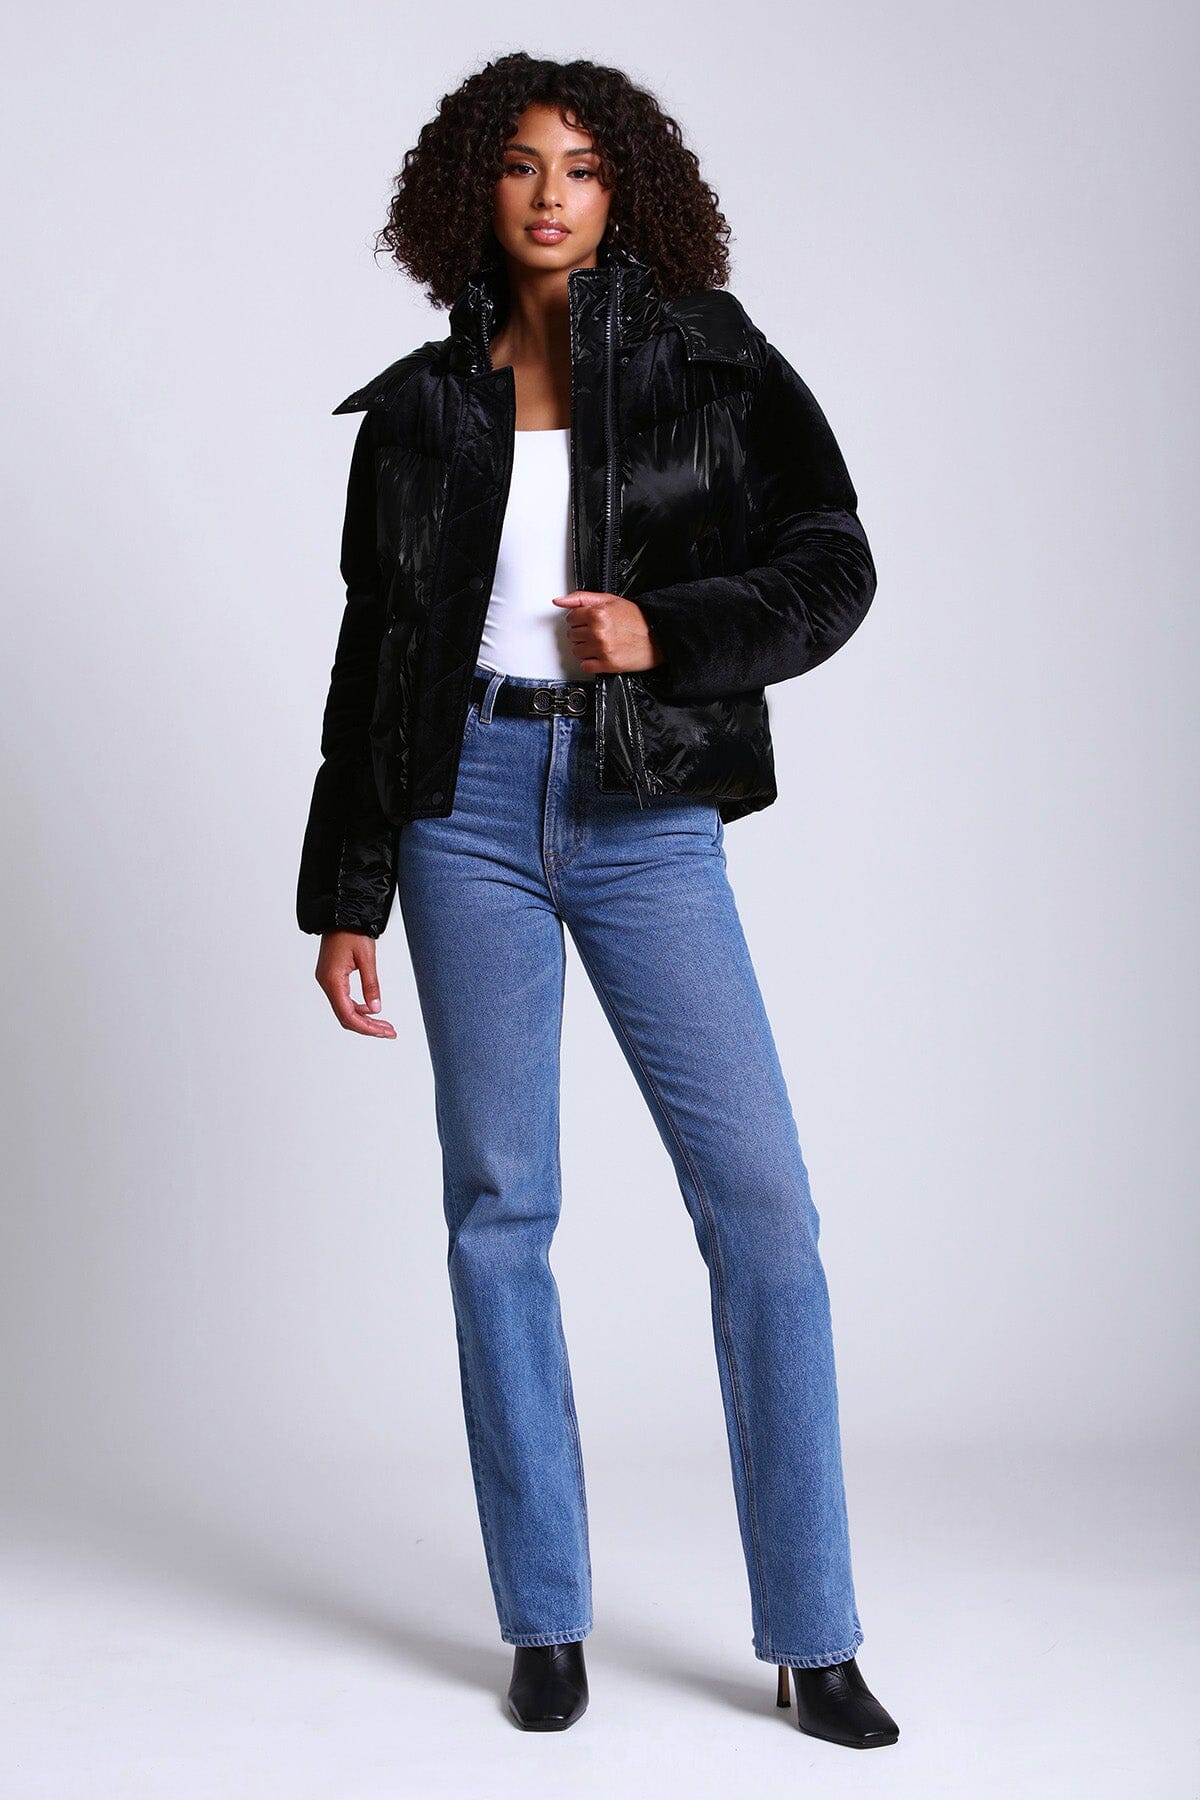 Black mixed media velvet puffer jacket coat - figure flattering Fall 2023 puffers jackets for women by Avec Les Filles